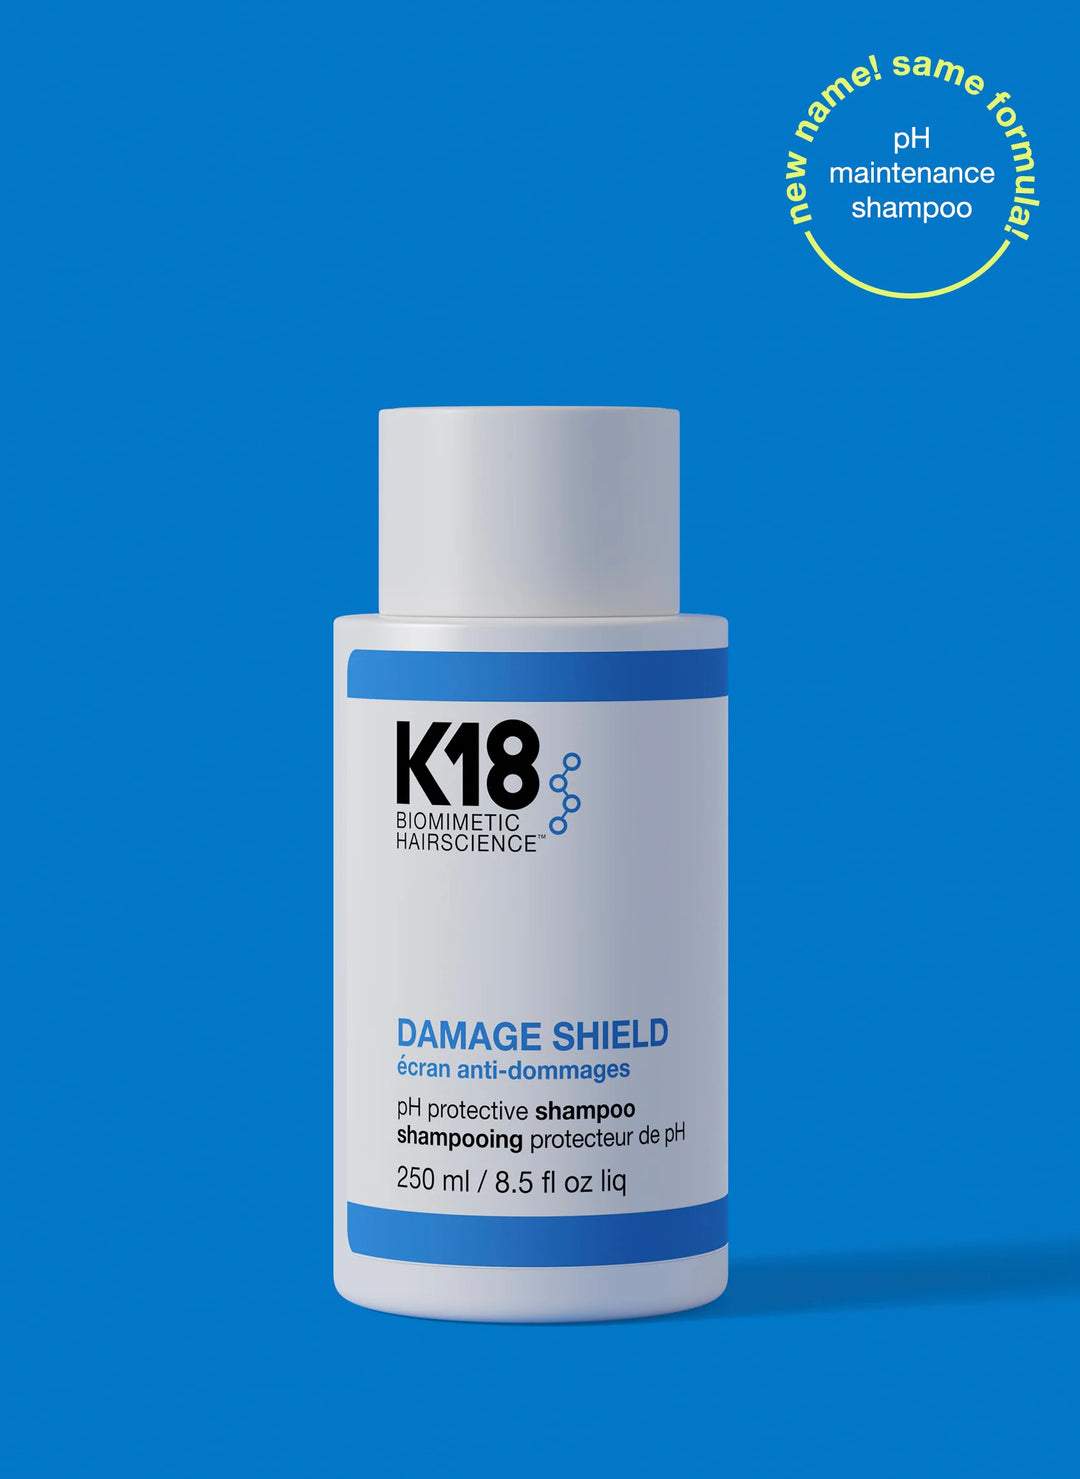 K18 Biomimetic Hairscience Damage Shield pH Protective Shampoo image of product